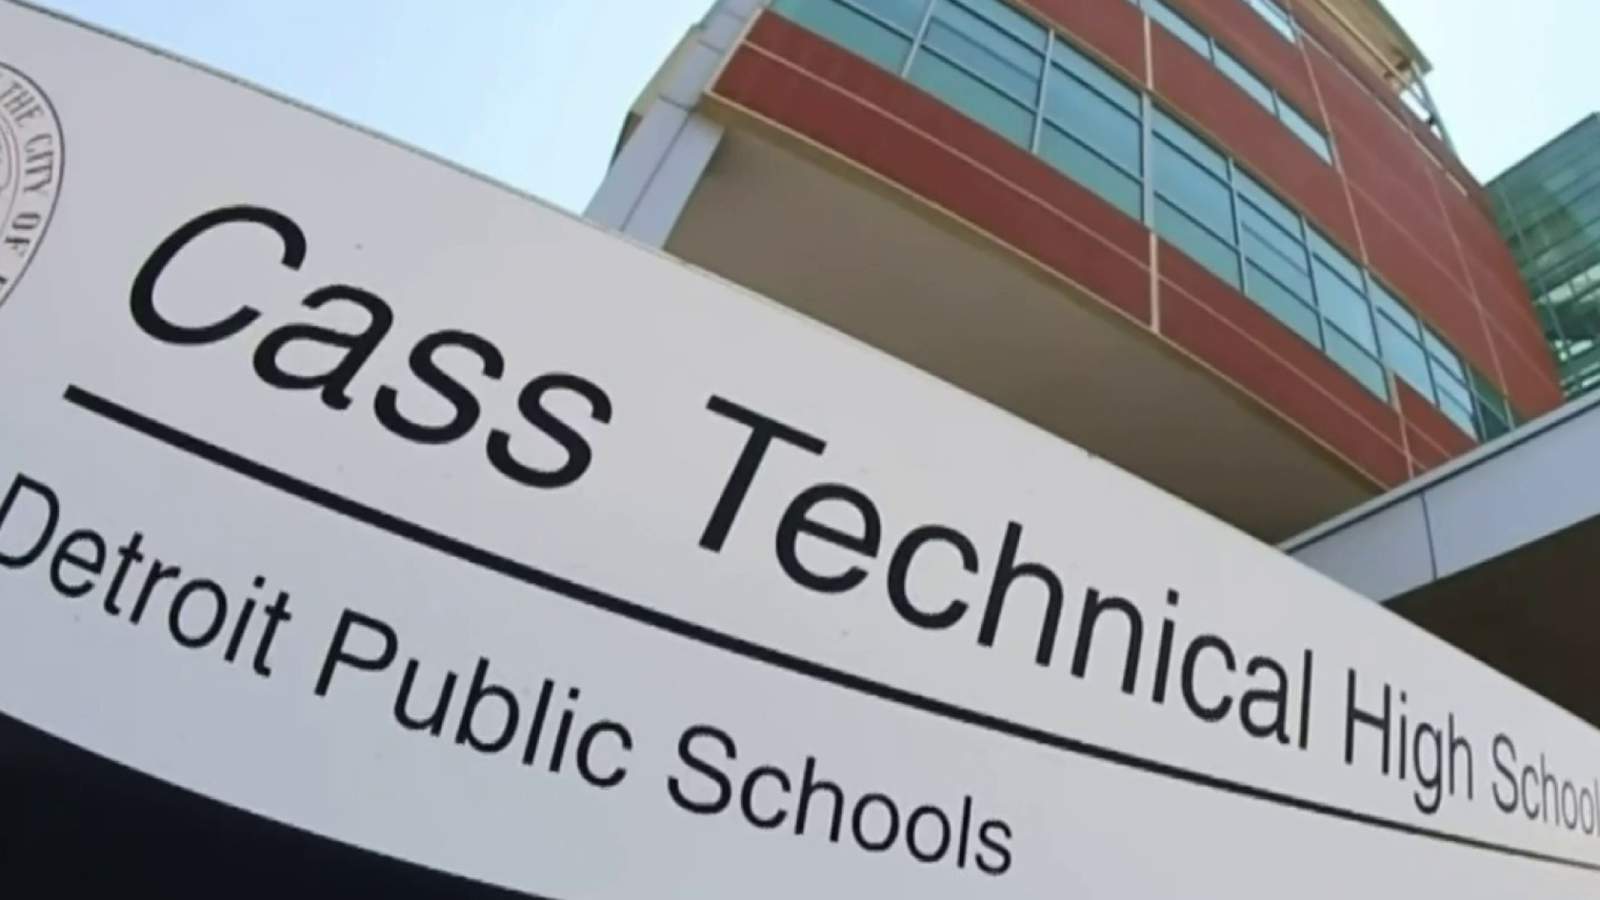 Controversy surfaces surrounding Cass Tech namesake